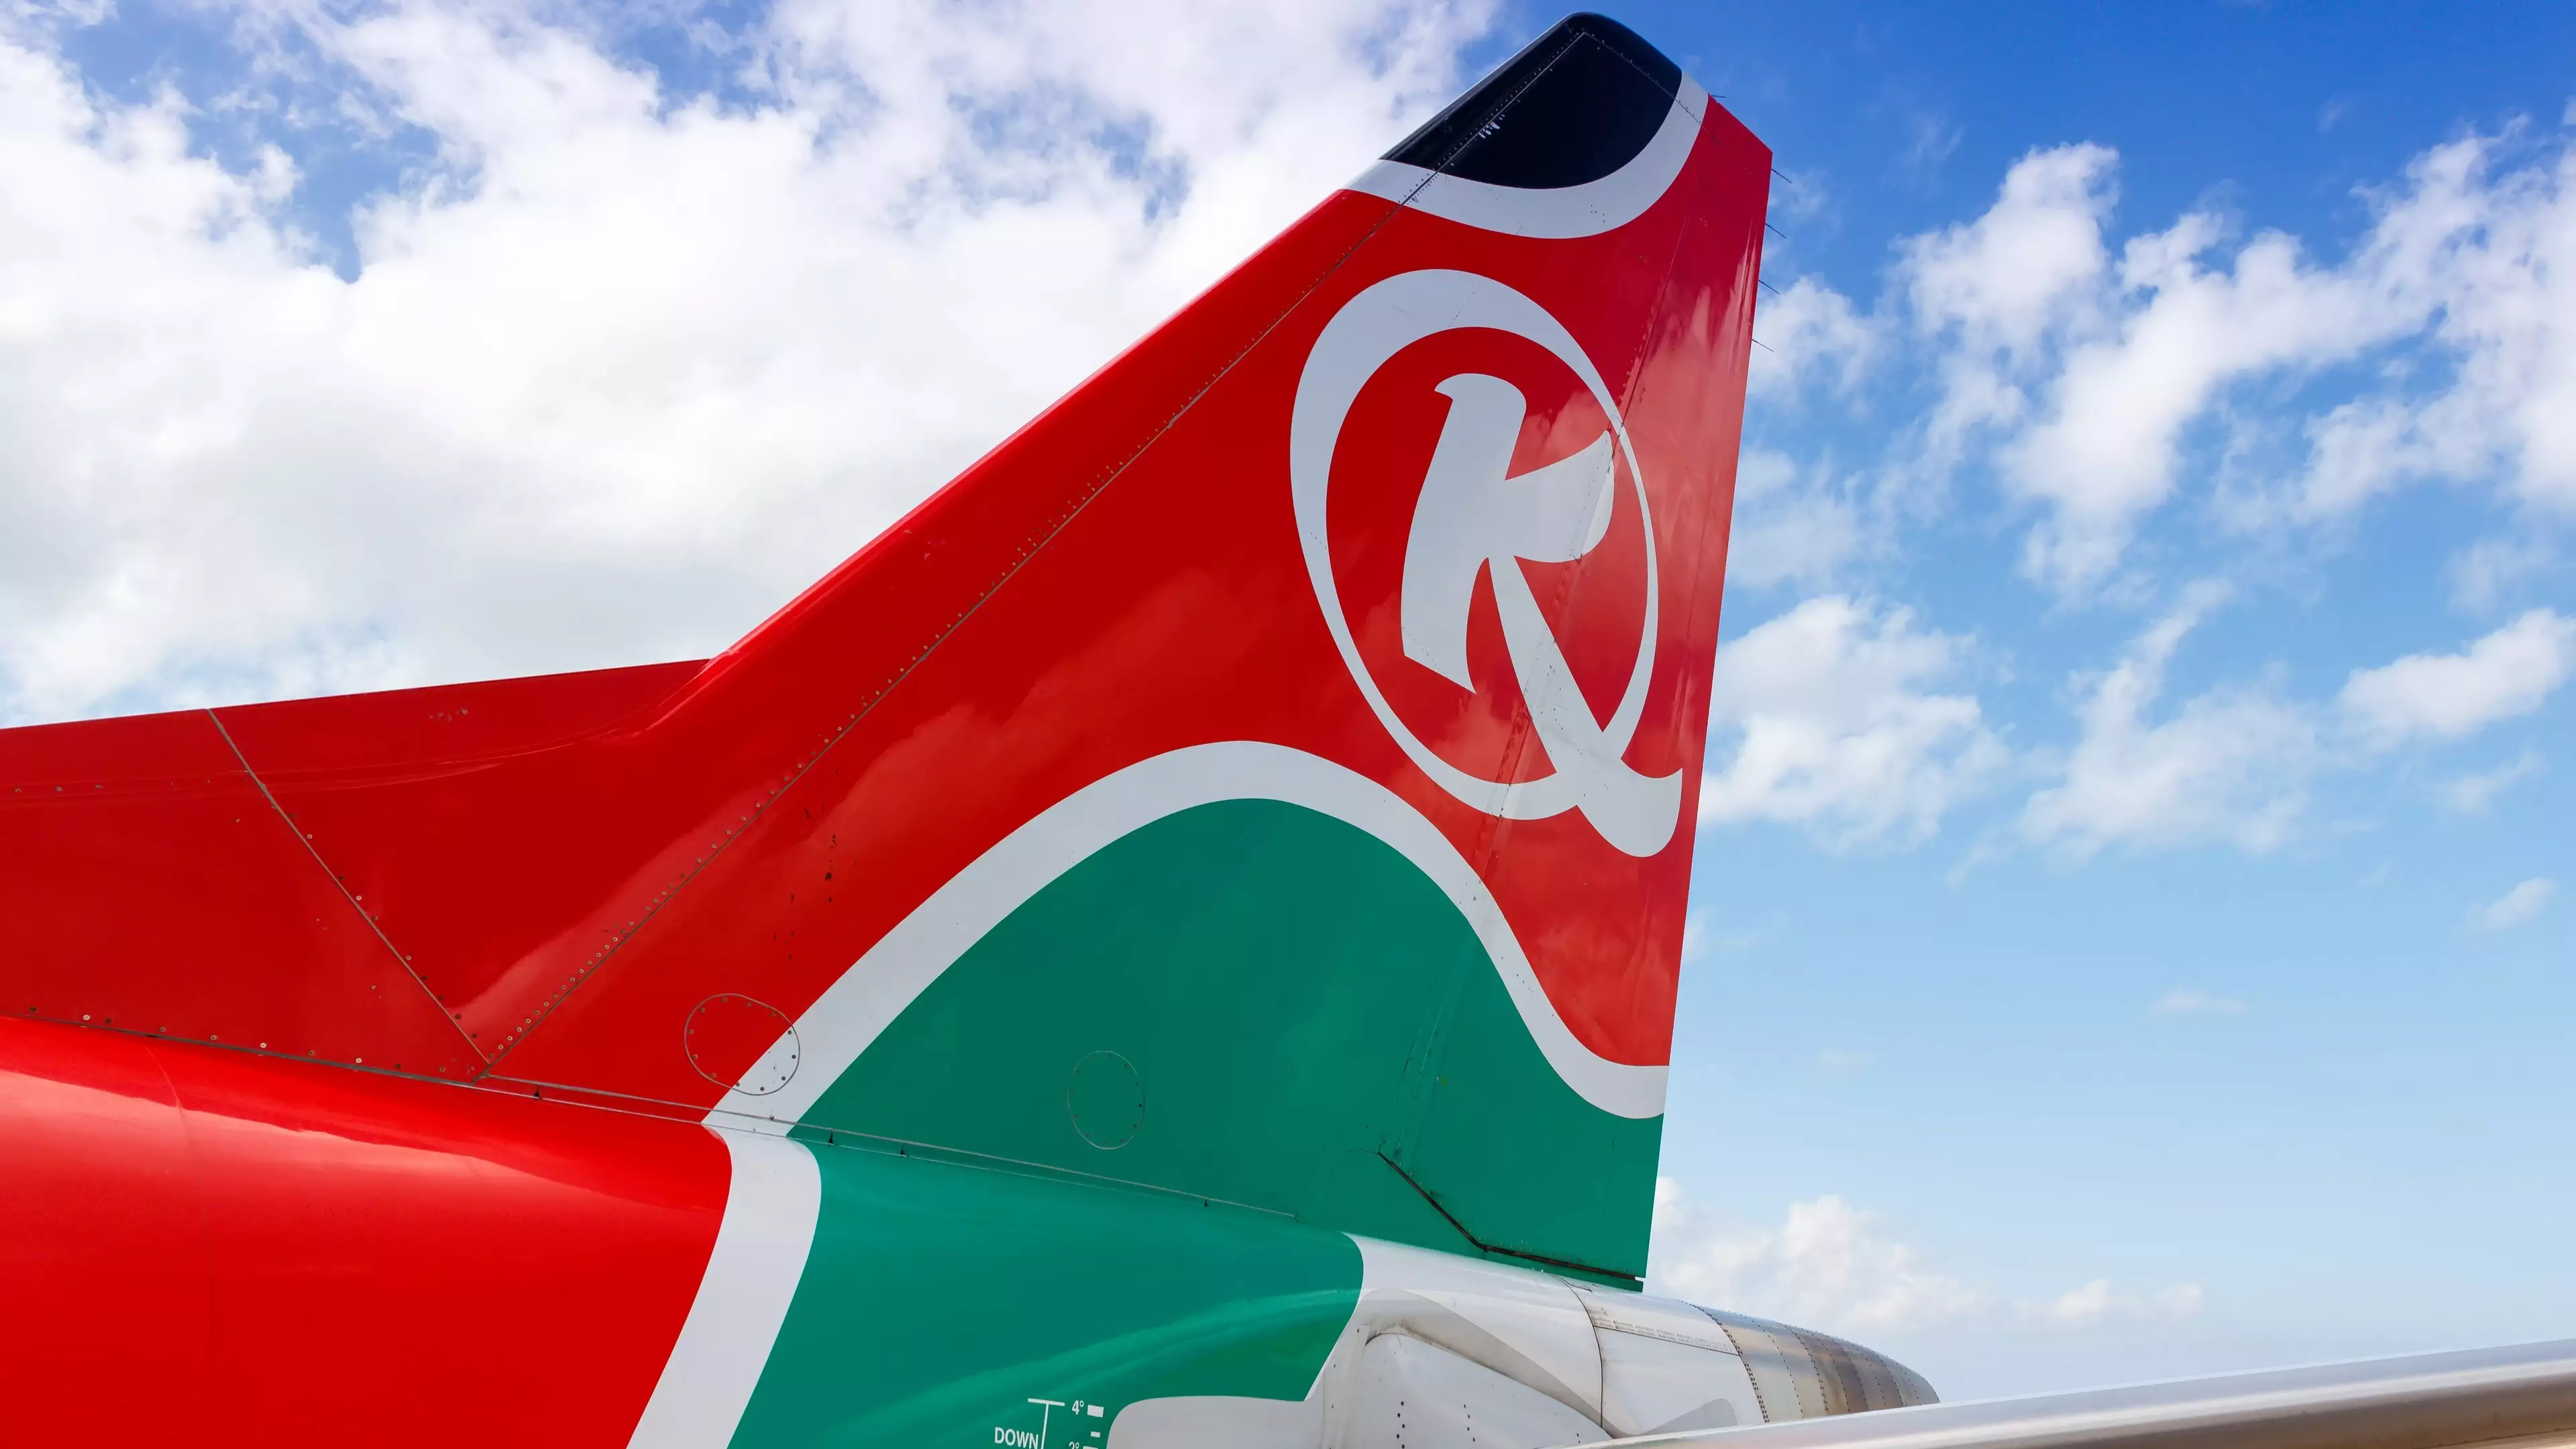 Body Of Kenya Airways Stowaway Fell And Nearly Killed London Sunbather